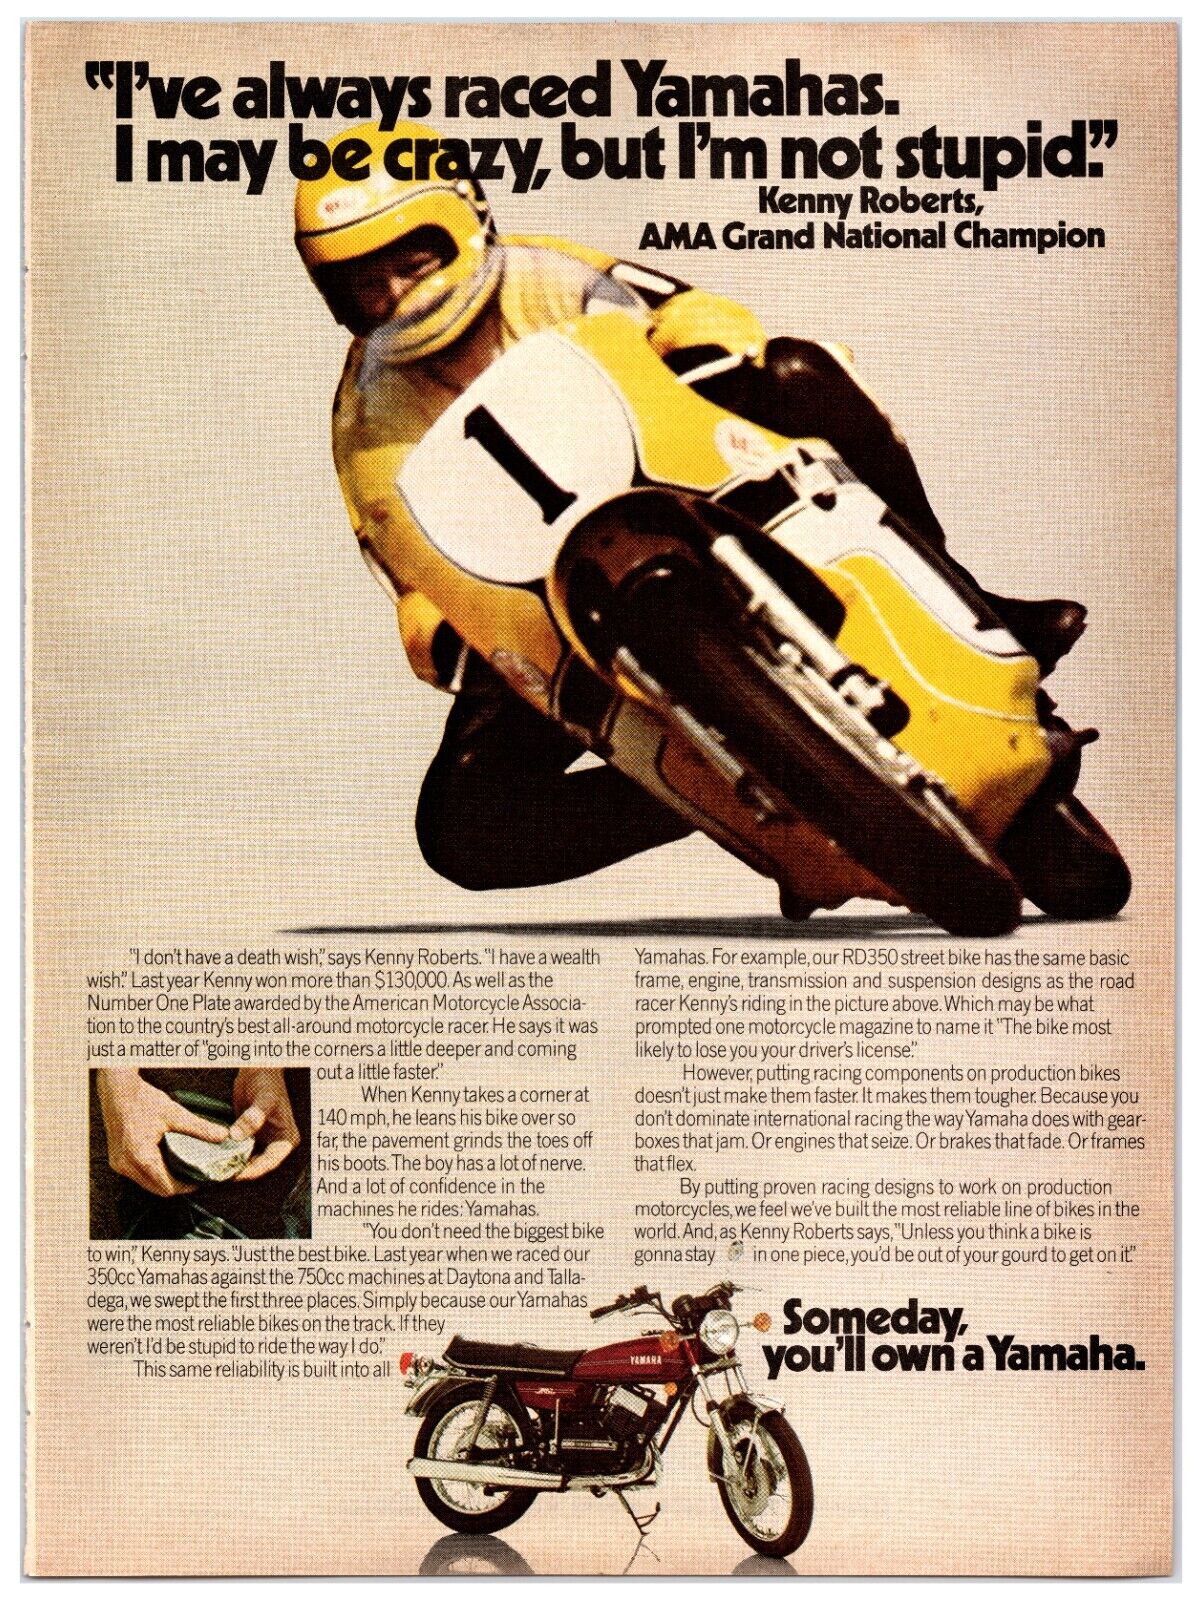 1974 Yamaha Kenny Roberts Motorcycle - Original Print Advertisement (8x11)